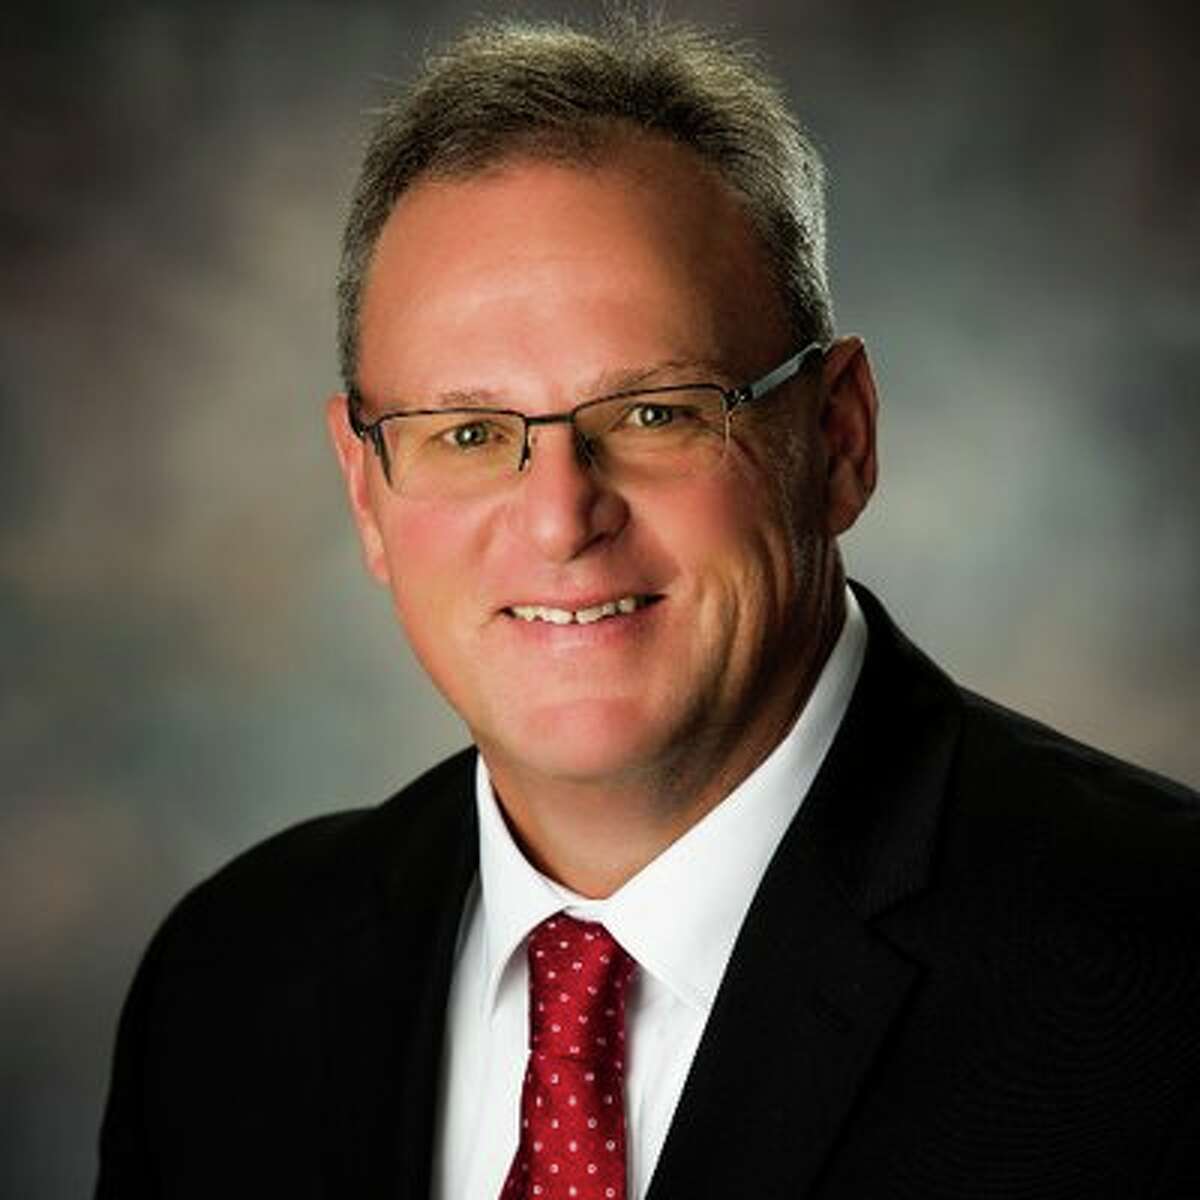 Midland Public Schools Superintendent Michael Sharrow